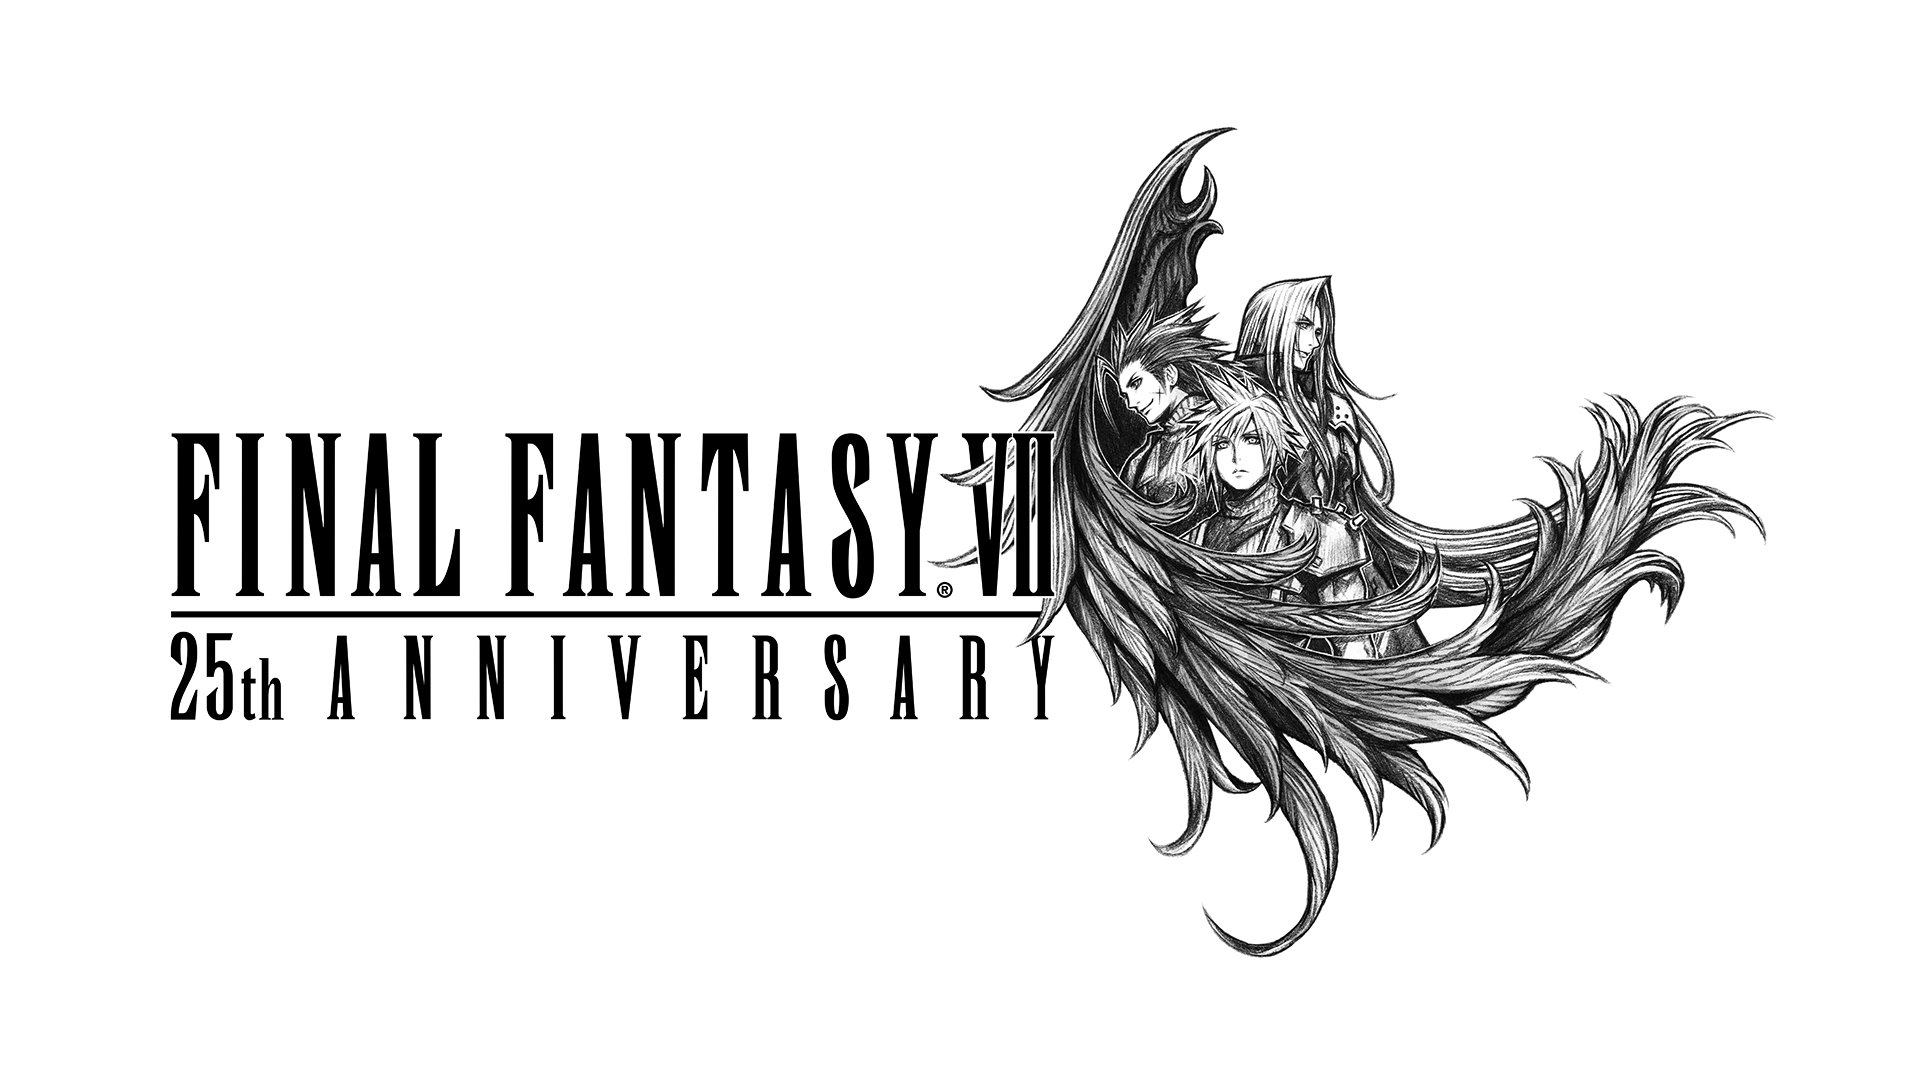 Square Enix เผยโลโกครบรอบ 25 ปีของ Final Fantasy VII